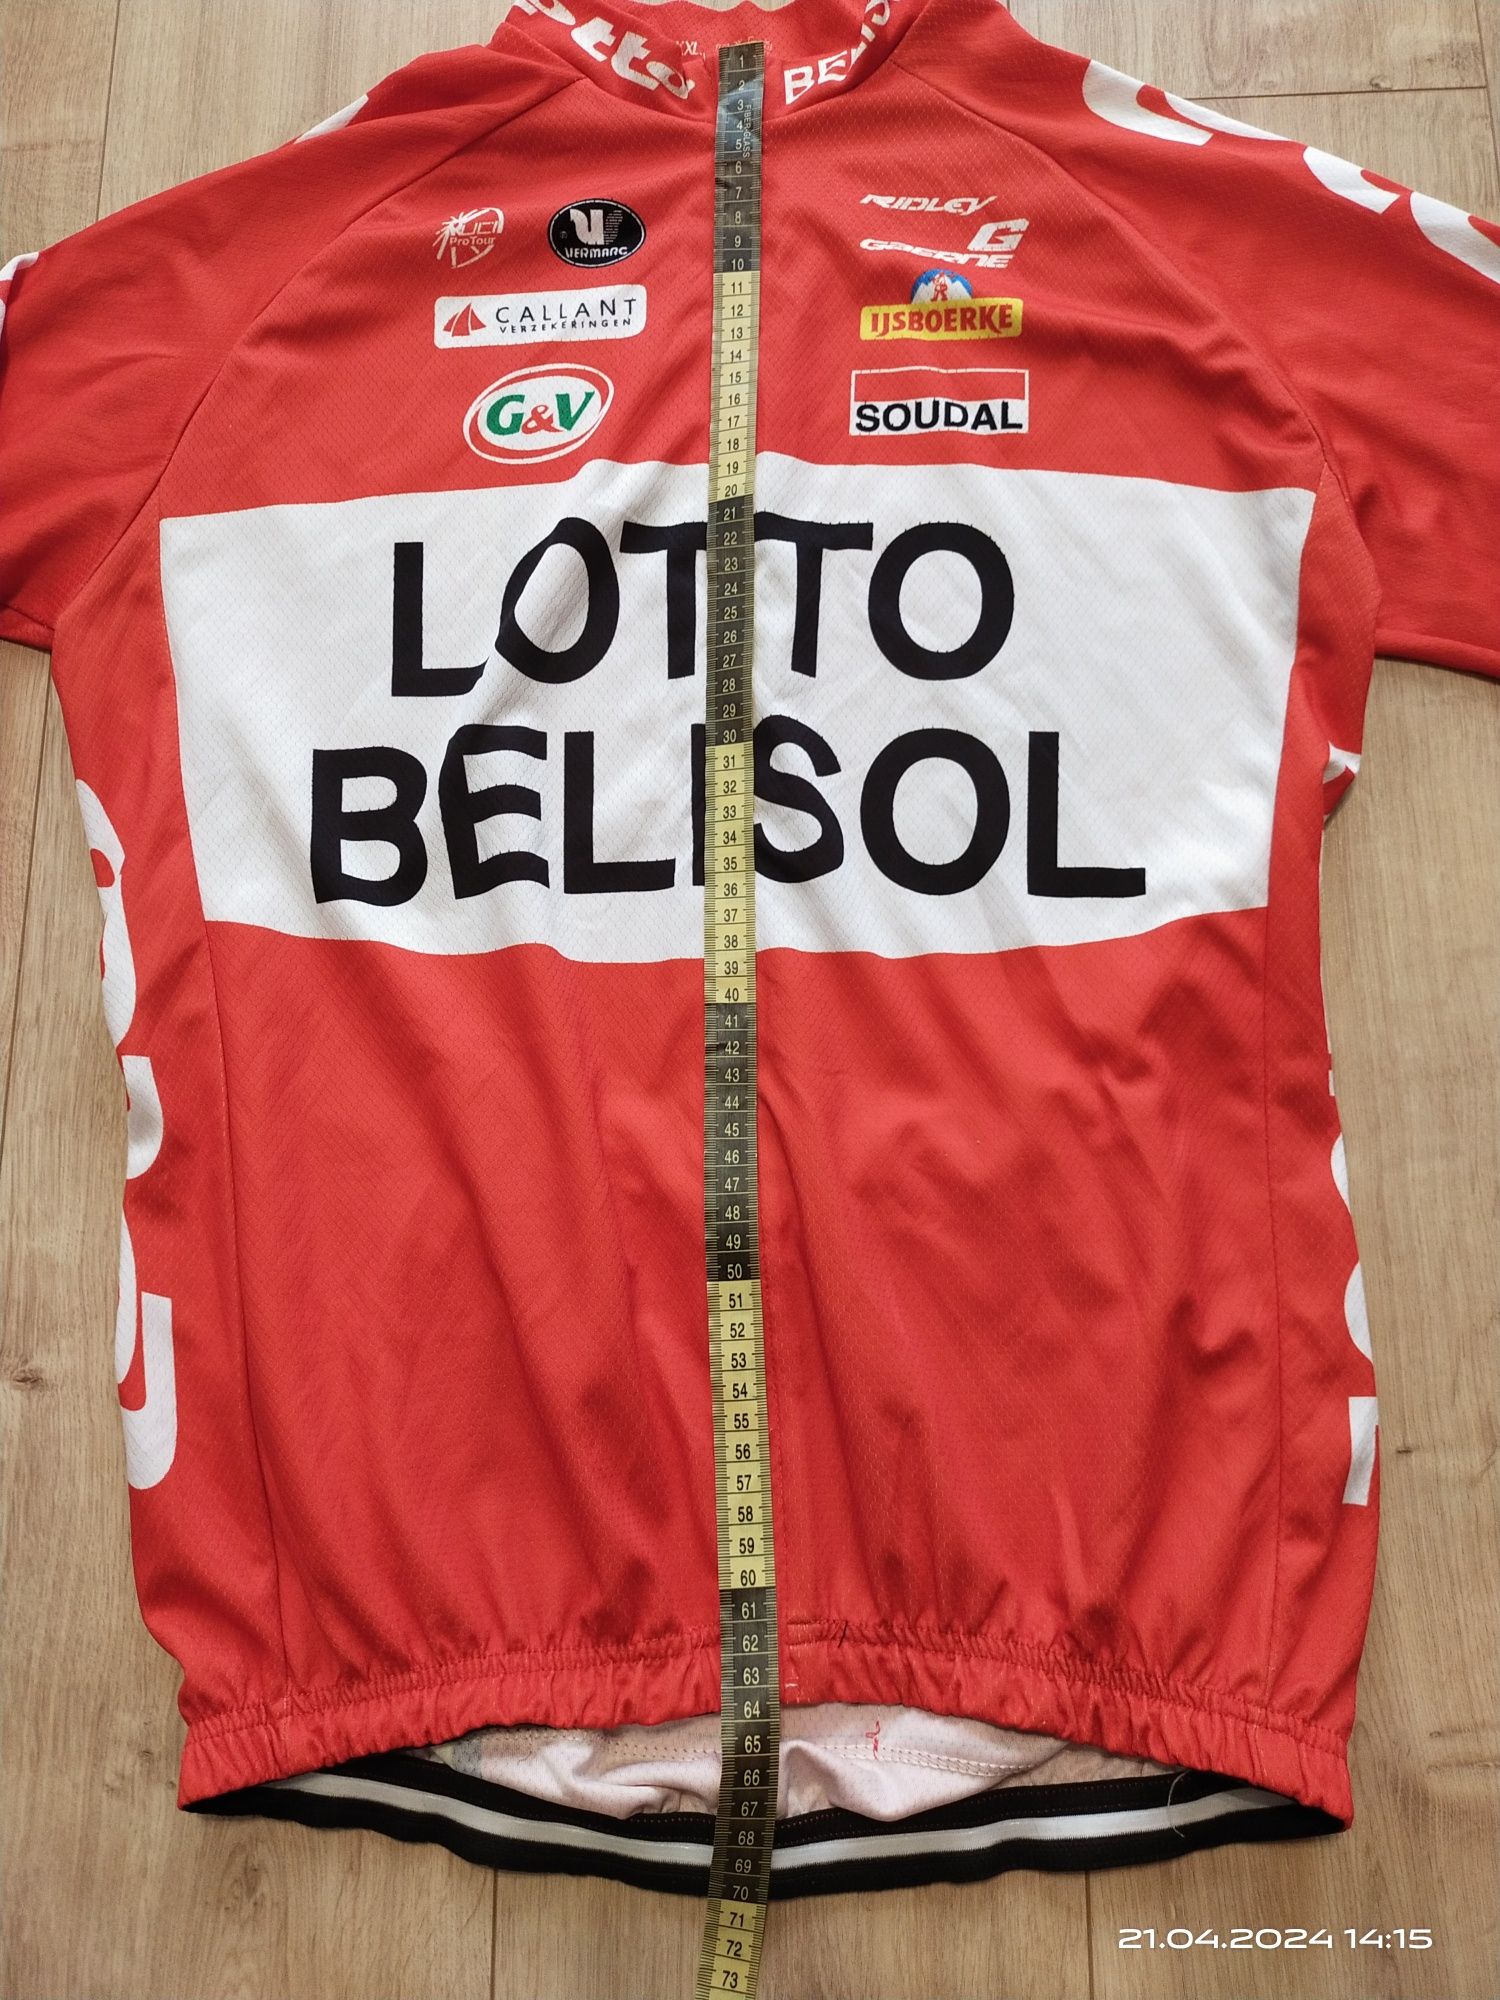 Bluza rowerowa Lotto Belisol vermarc 2014